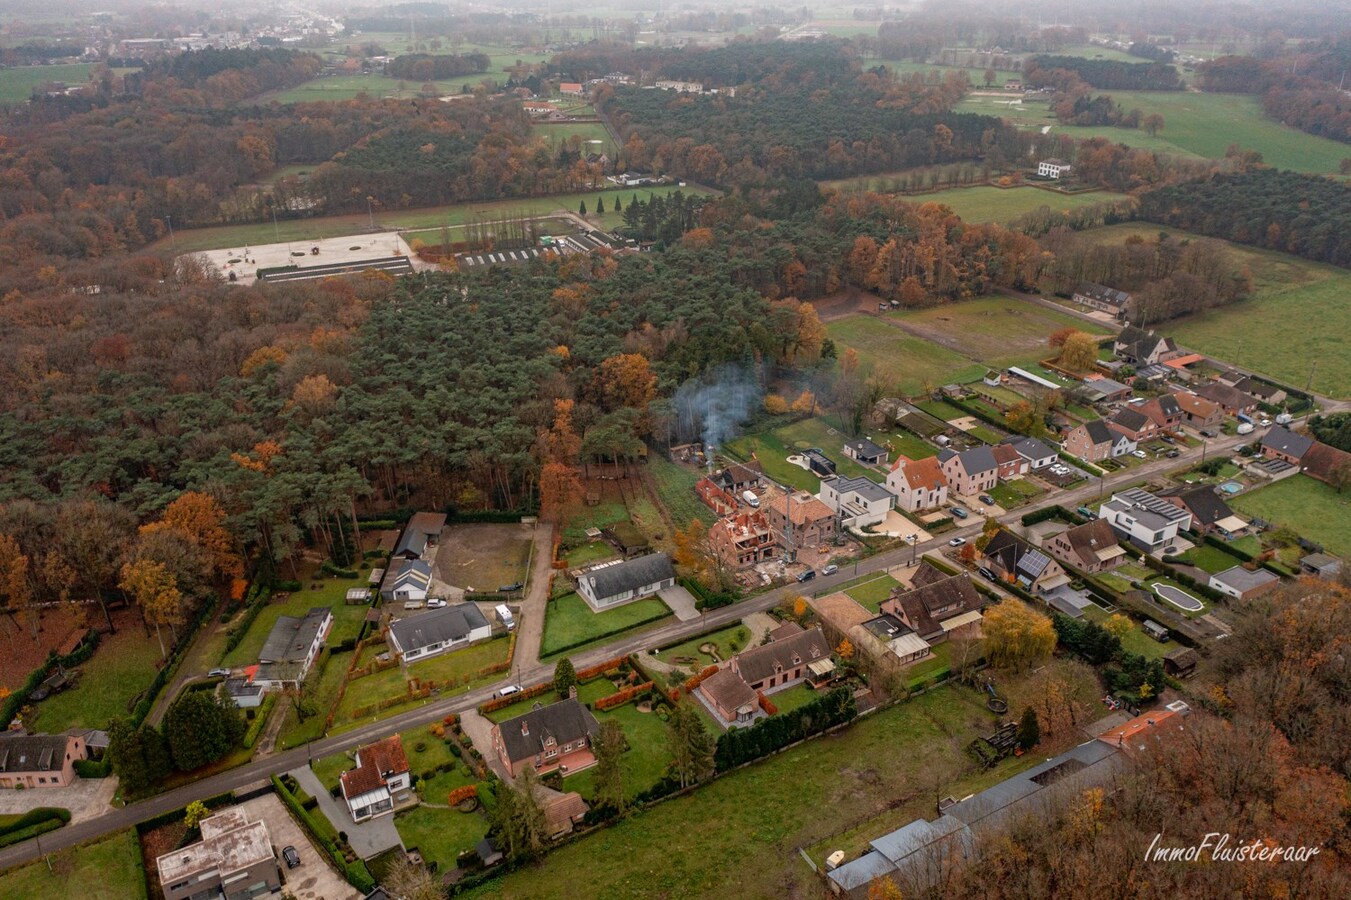 Property for sale in Zandhoven